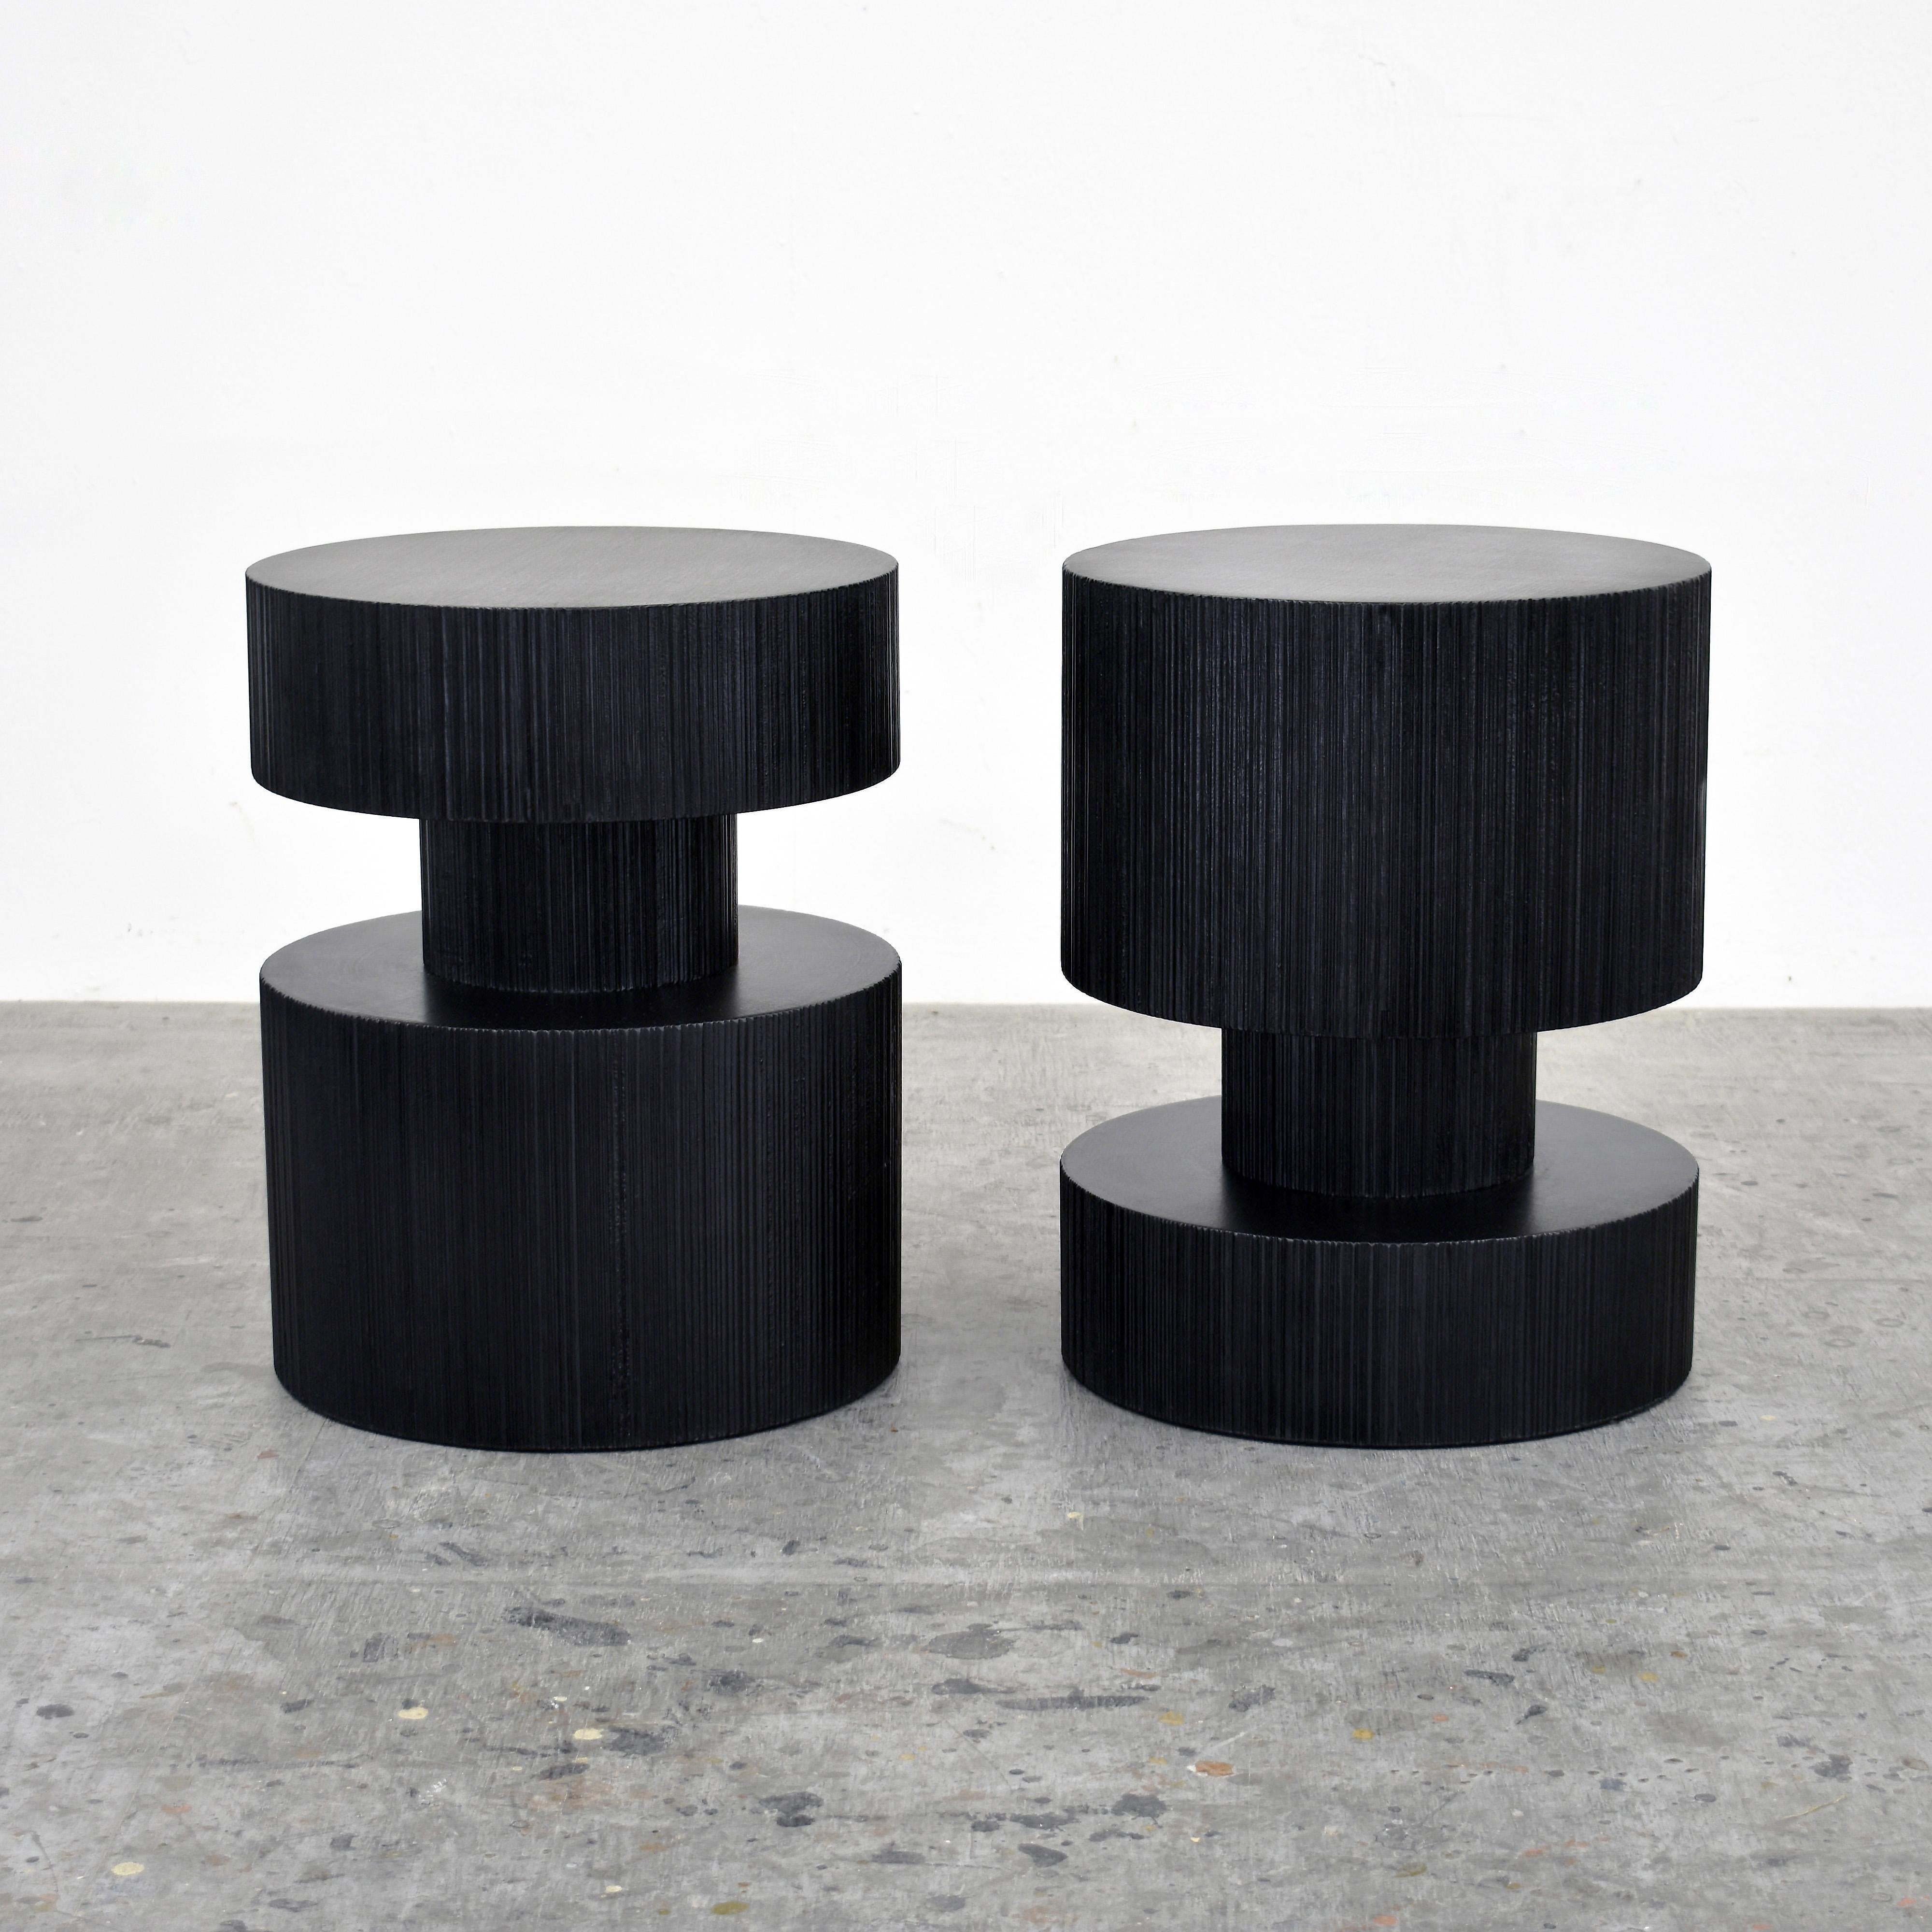 PAIR Round Revert tables / stools
Sawn + blackened + maple
Measures: 20